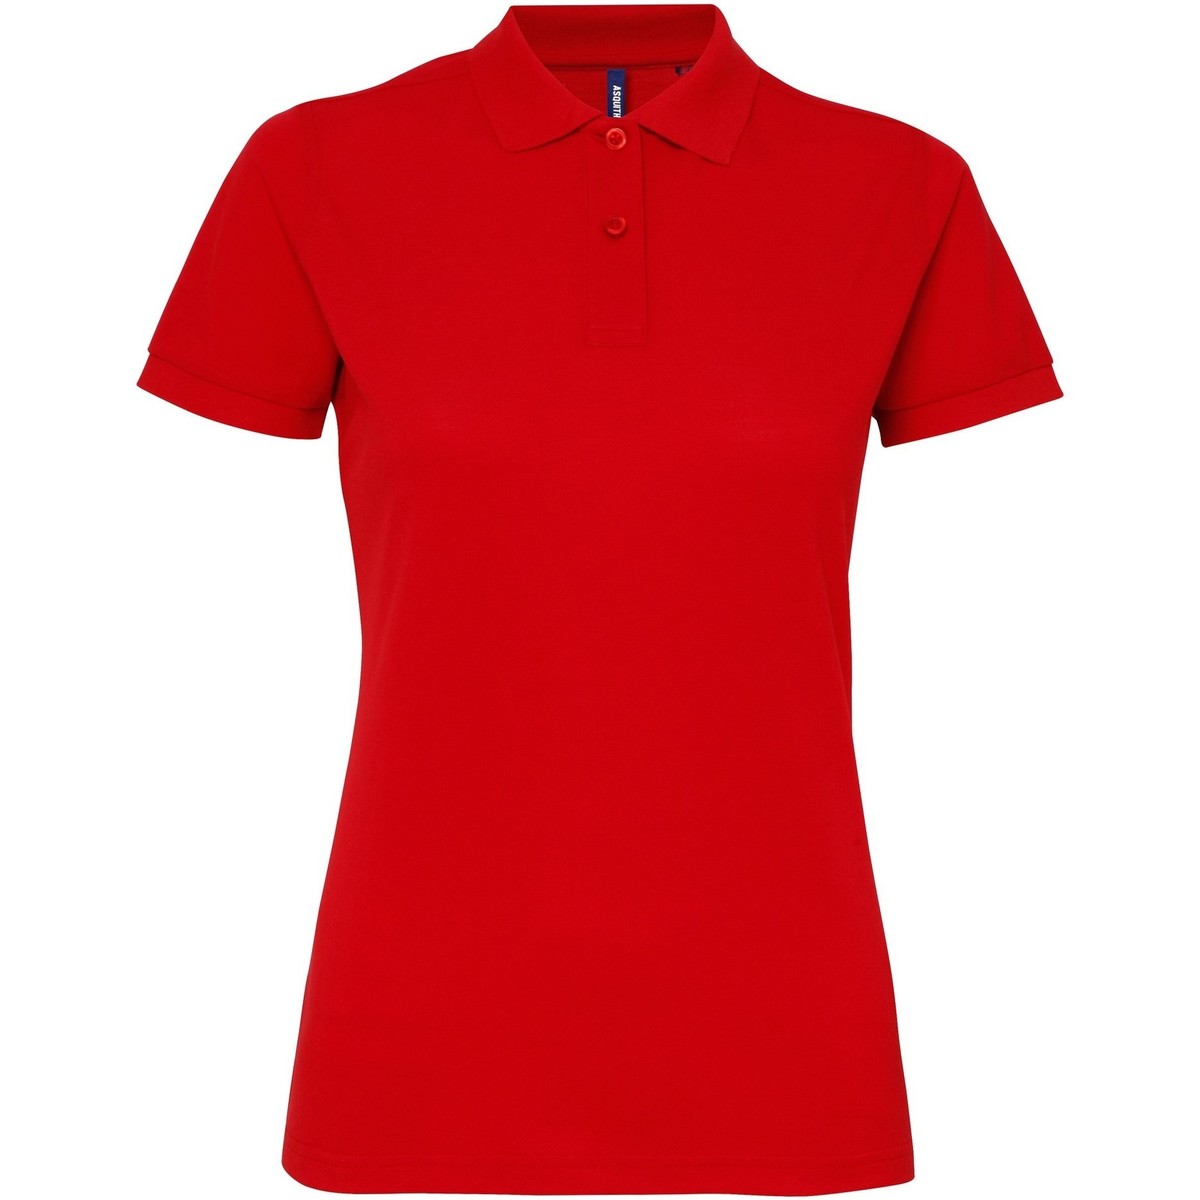 Vêtements Femme Polos manches courtes Asquith & Fox AQ025 Rouge